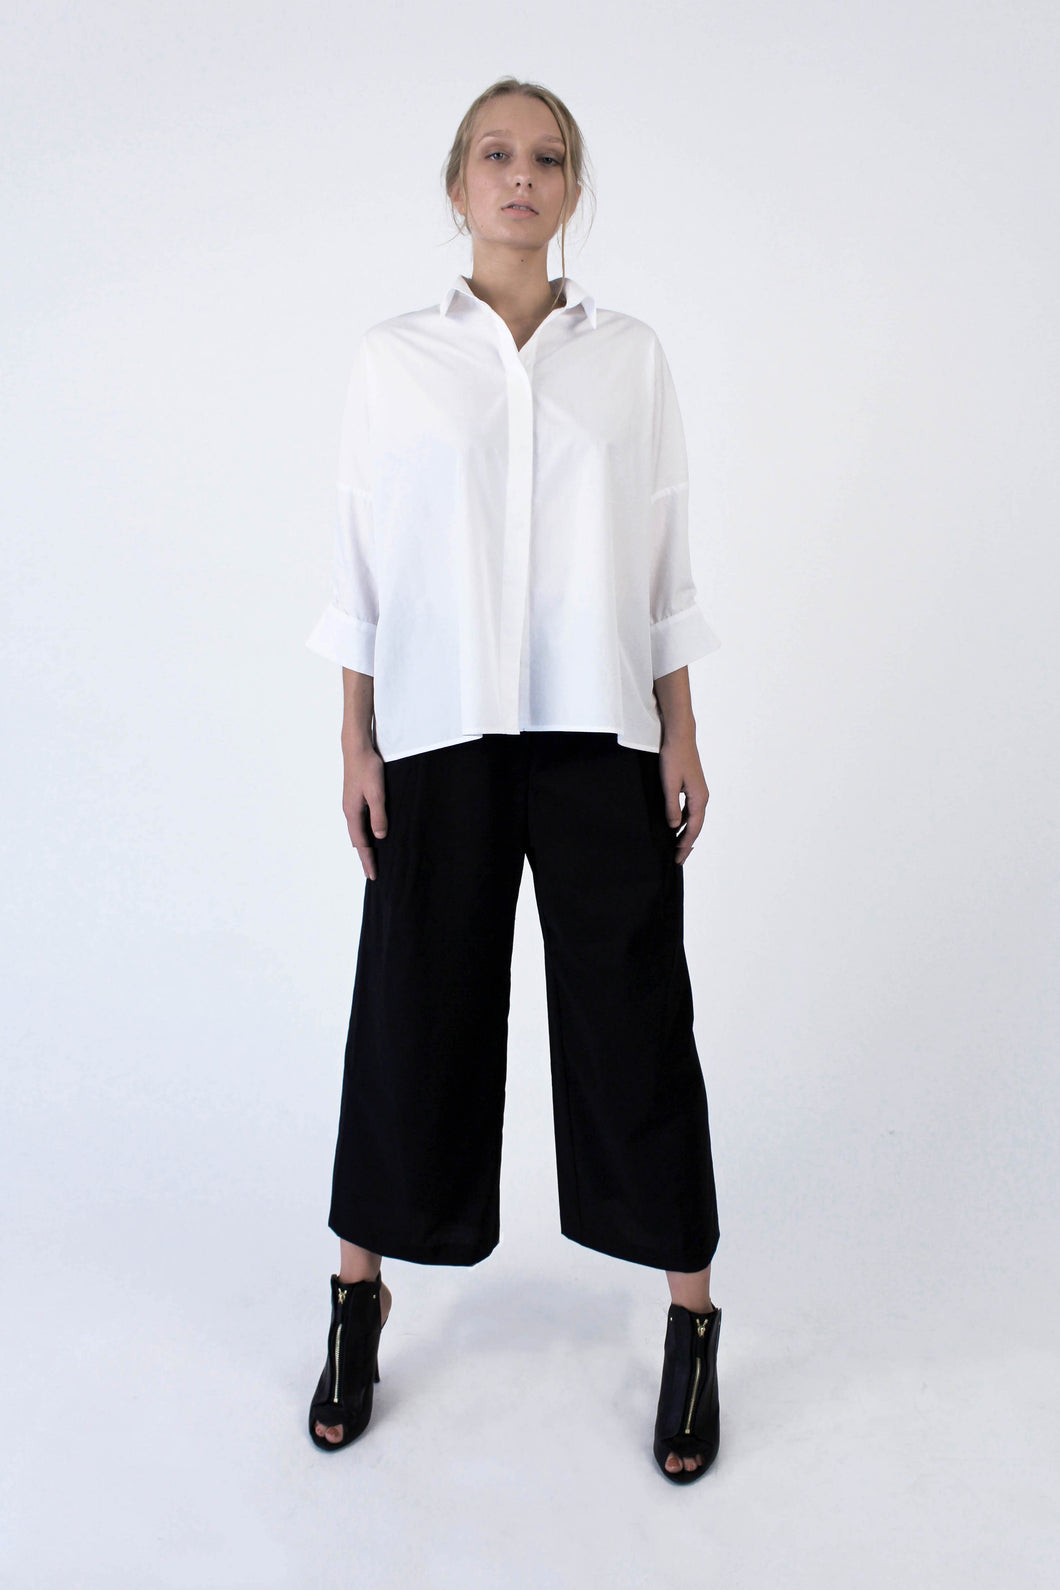 Nobu Cotton Oversized Shirt - White with thin navy stripes